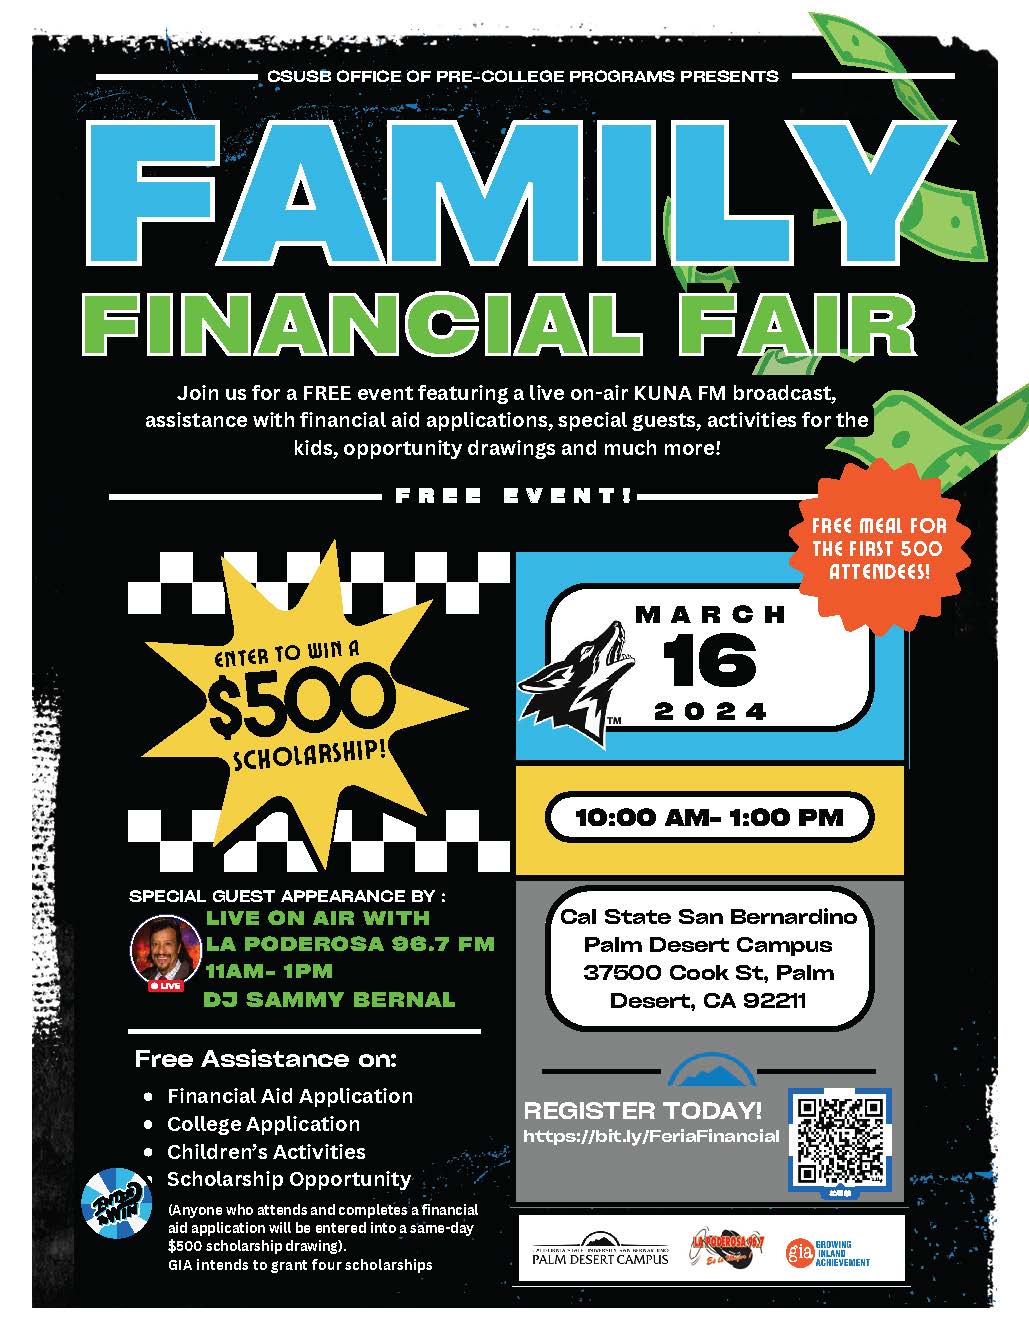 Family Financial Fair flyer